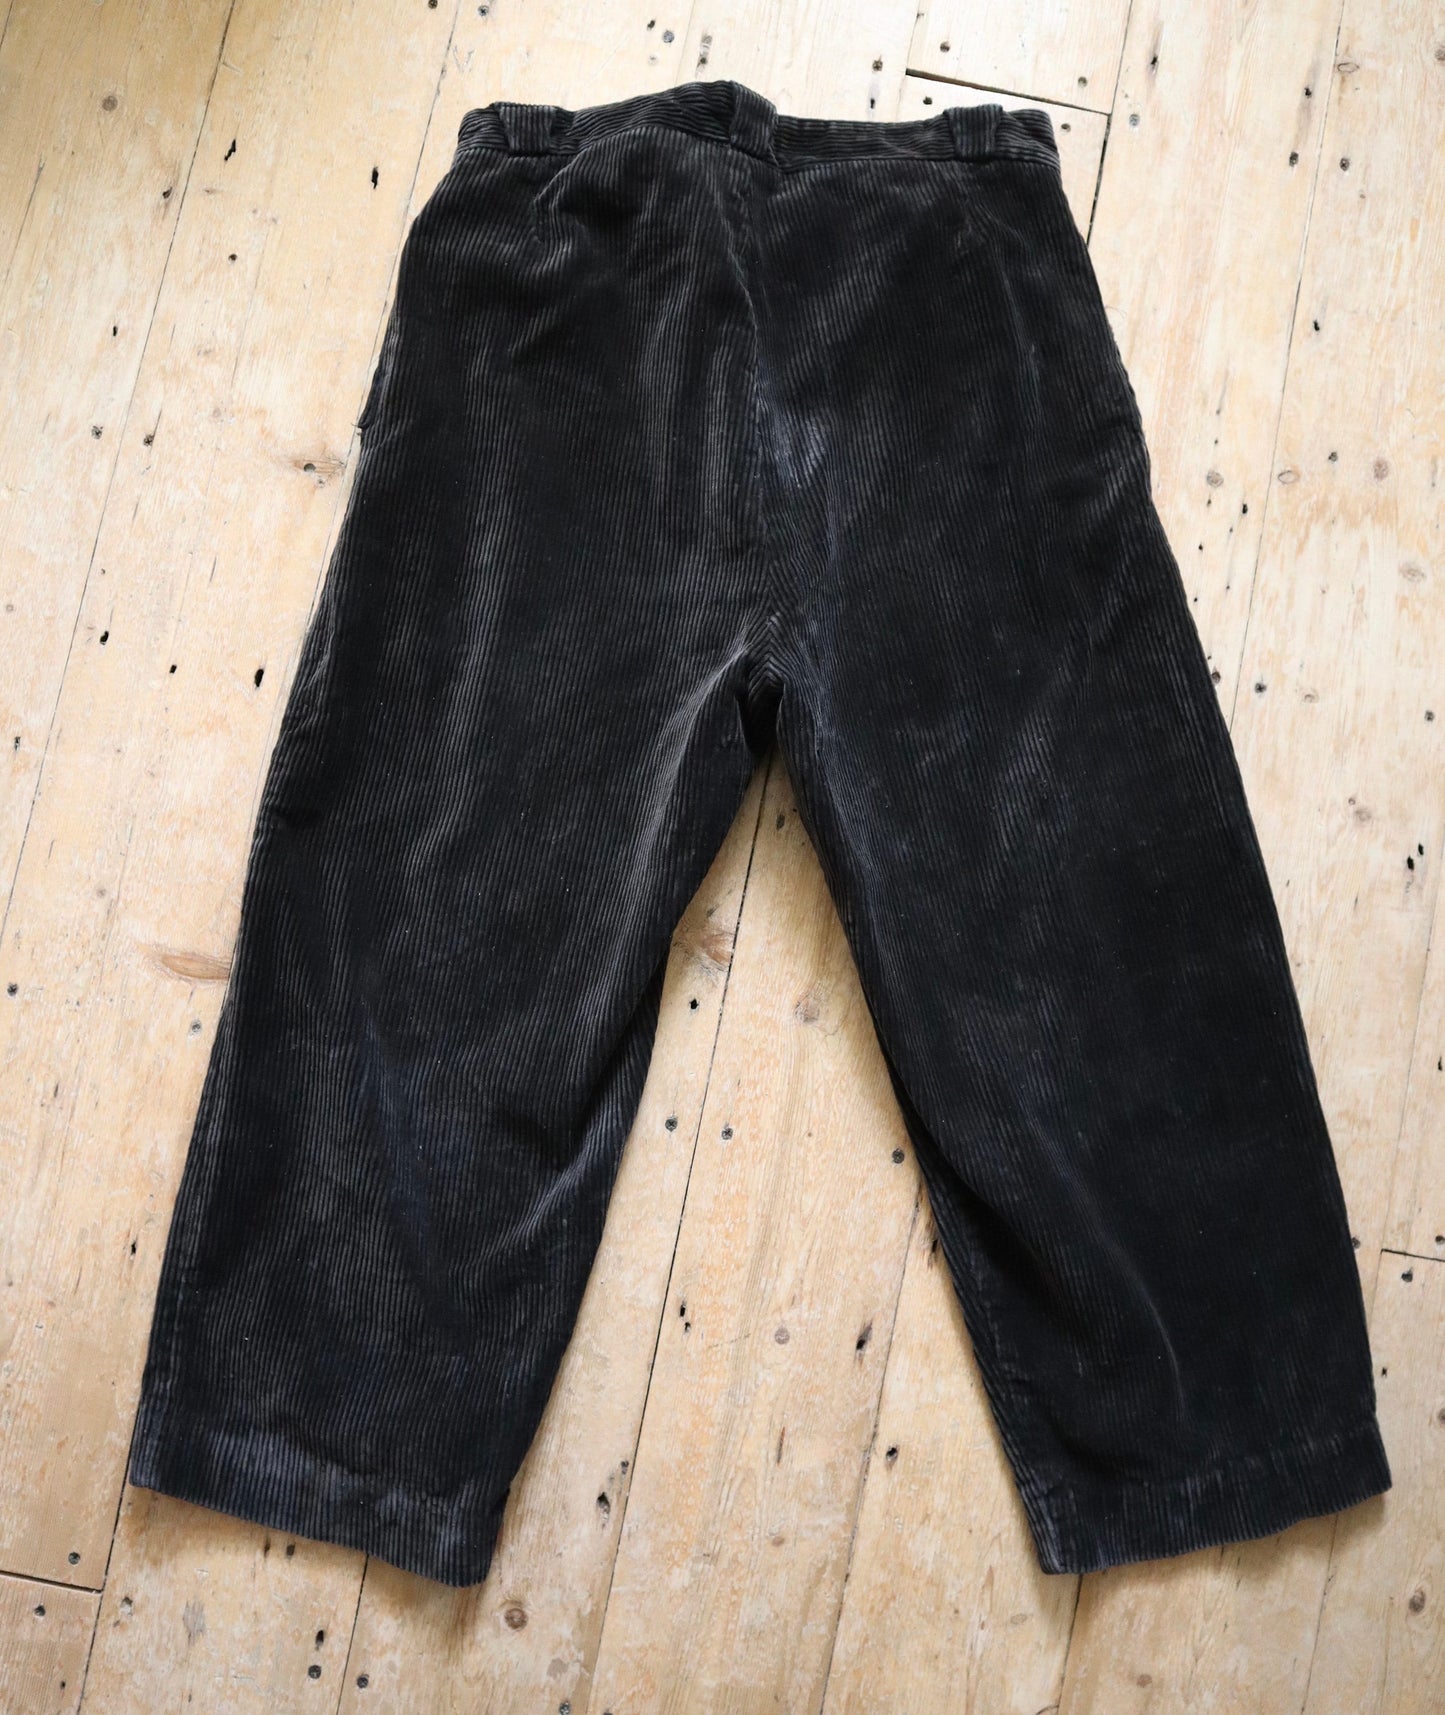 1950s French Workwear Trousers Pants Brown Corduroy by La Biche Chore